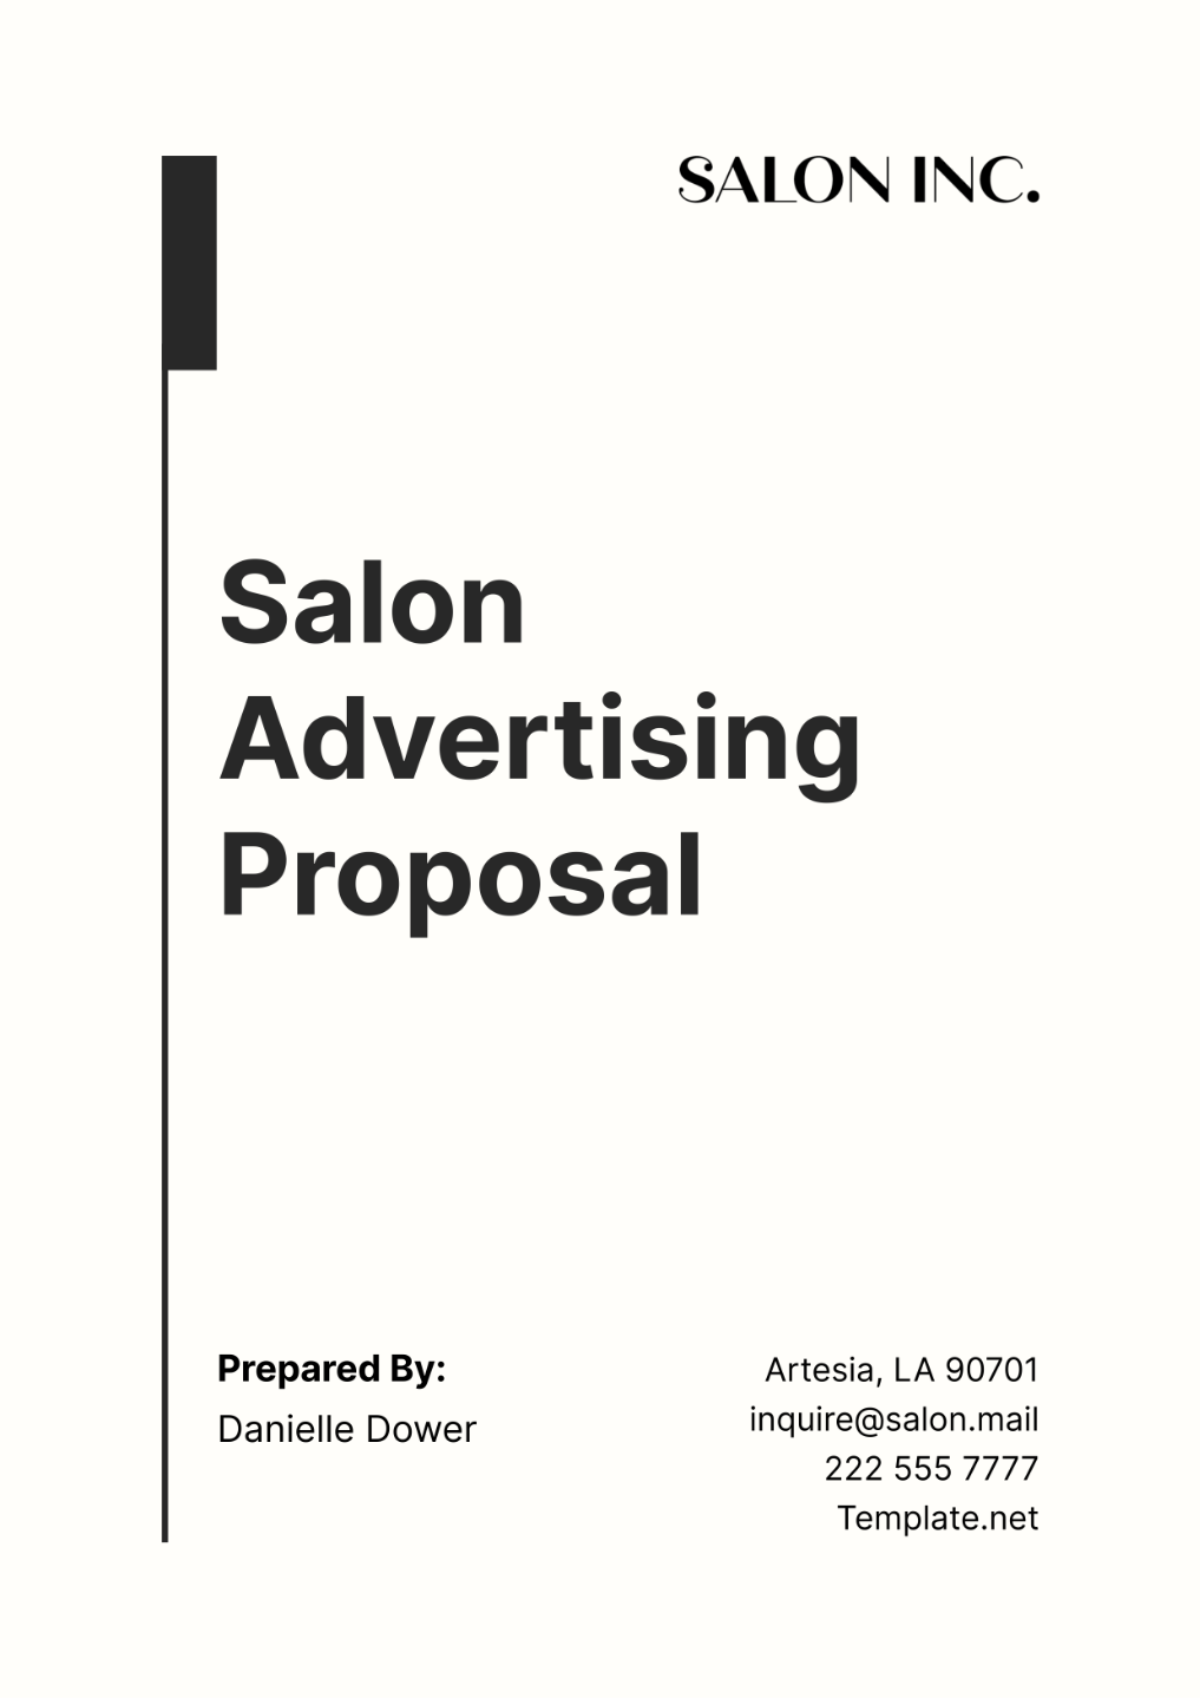 Free Salon Advertising Proposal Template